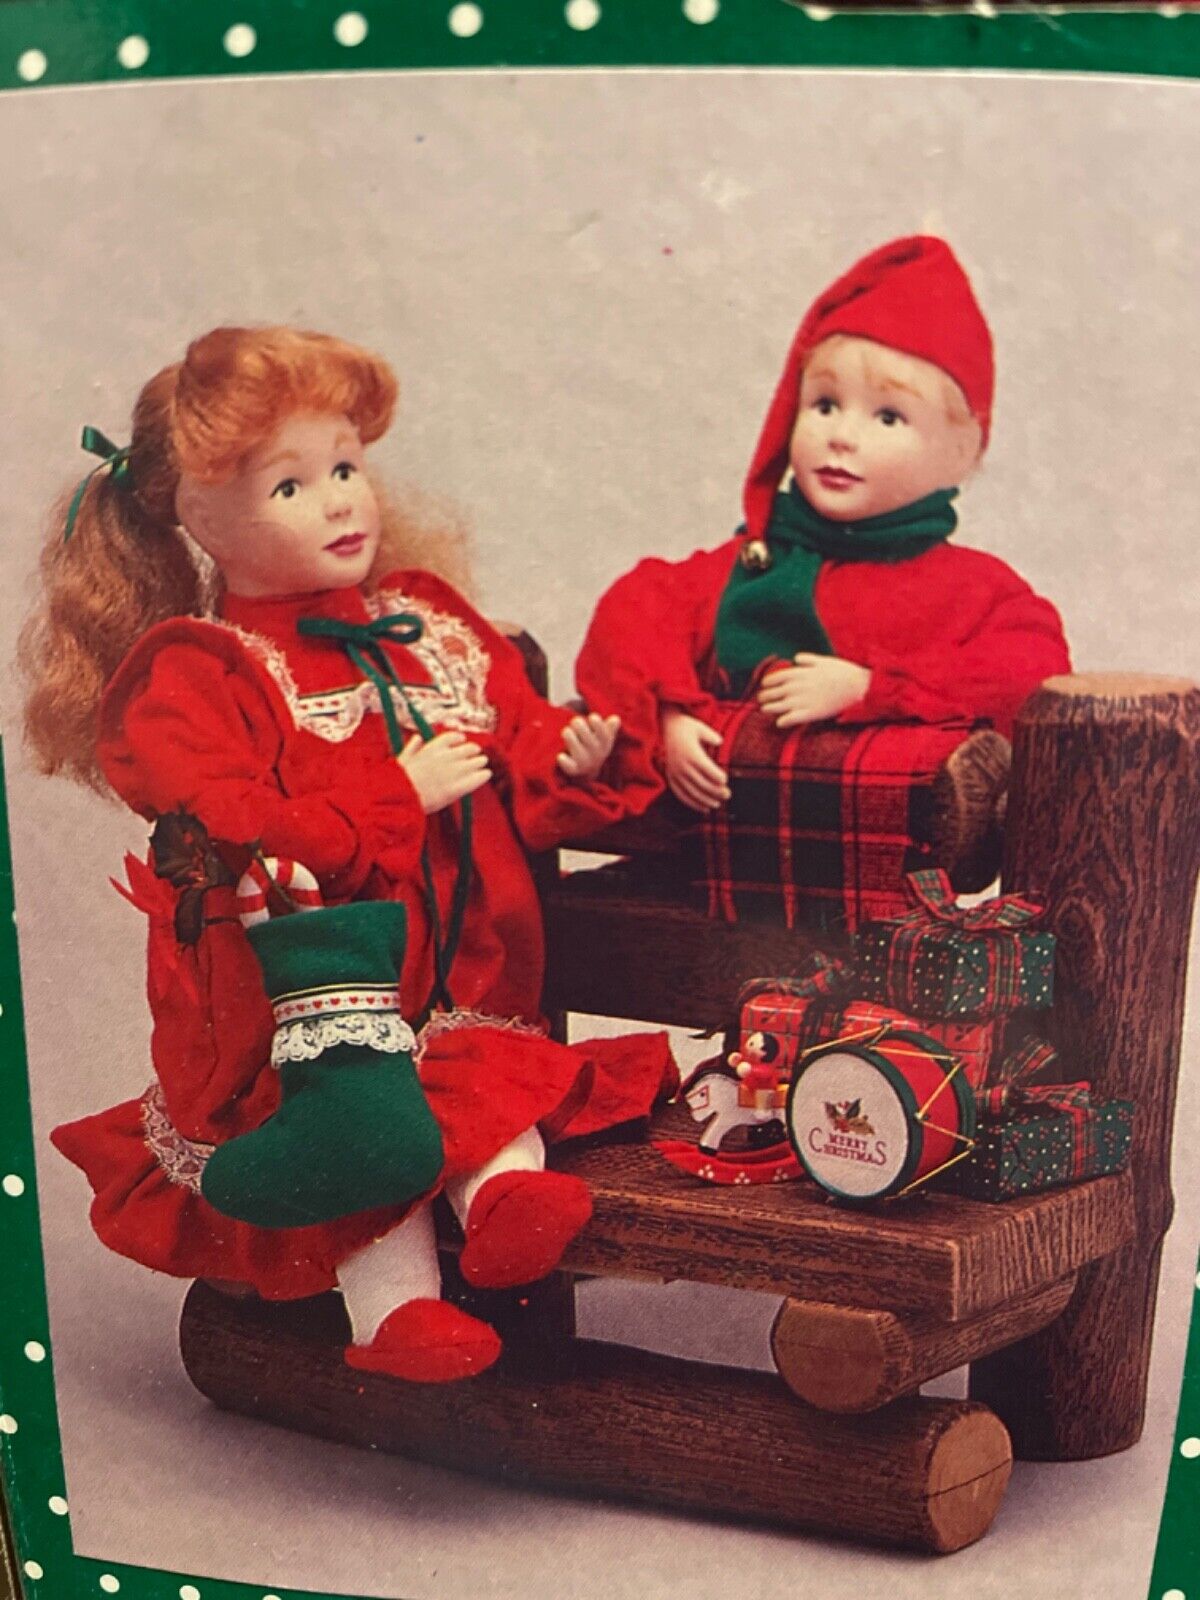 1993 Vintage Musical Animated Holiday Creations Christmas BOY and GIRL on bench